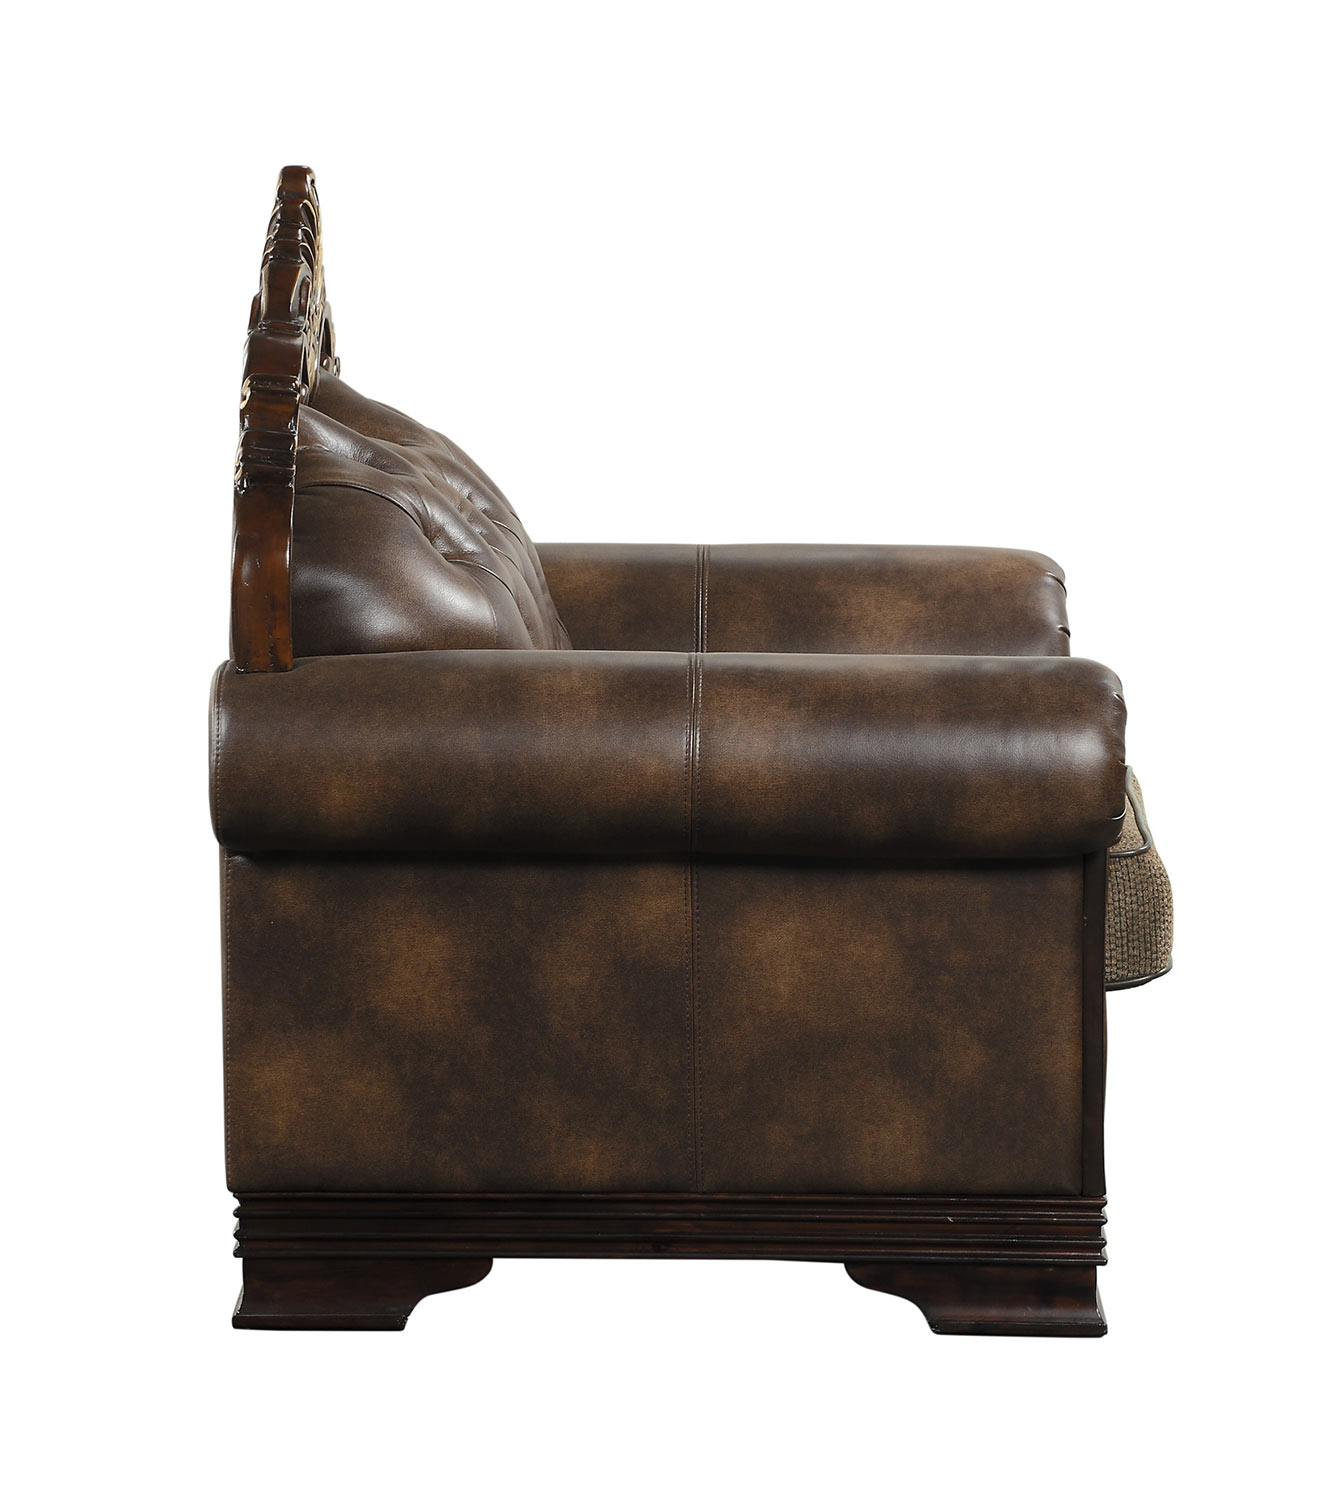 Homelegance Croydon Chair - Brown